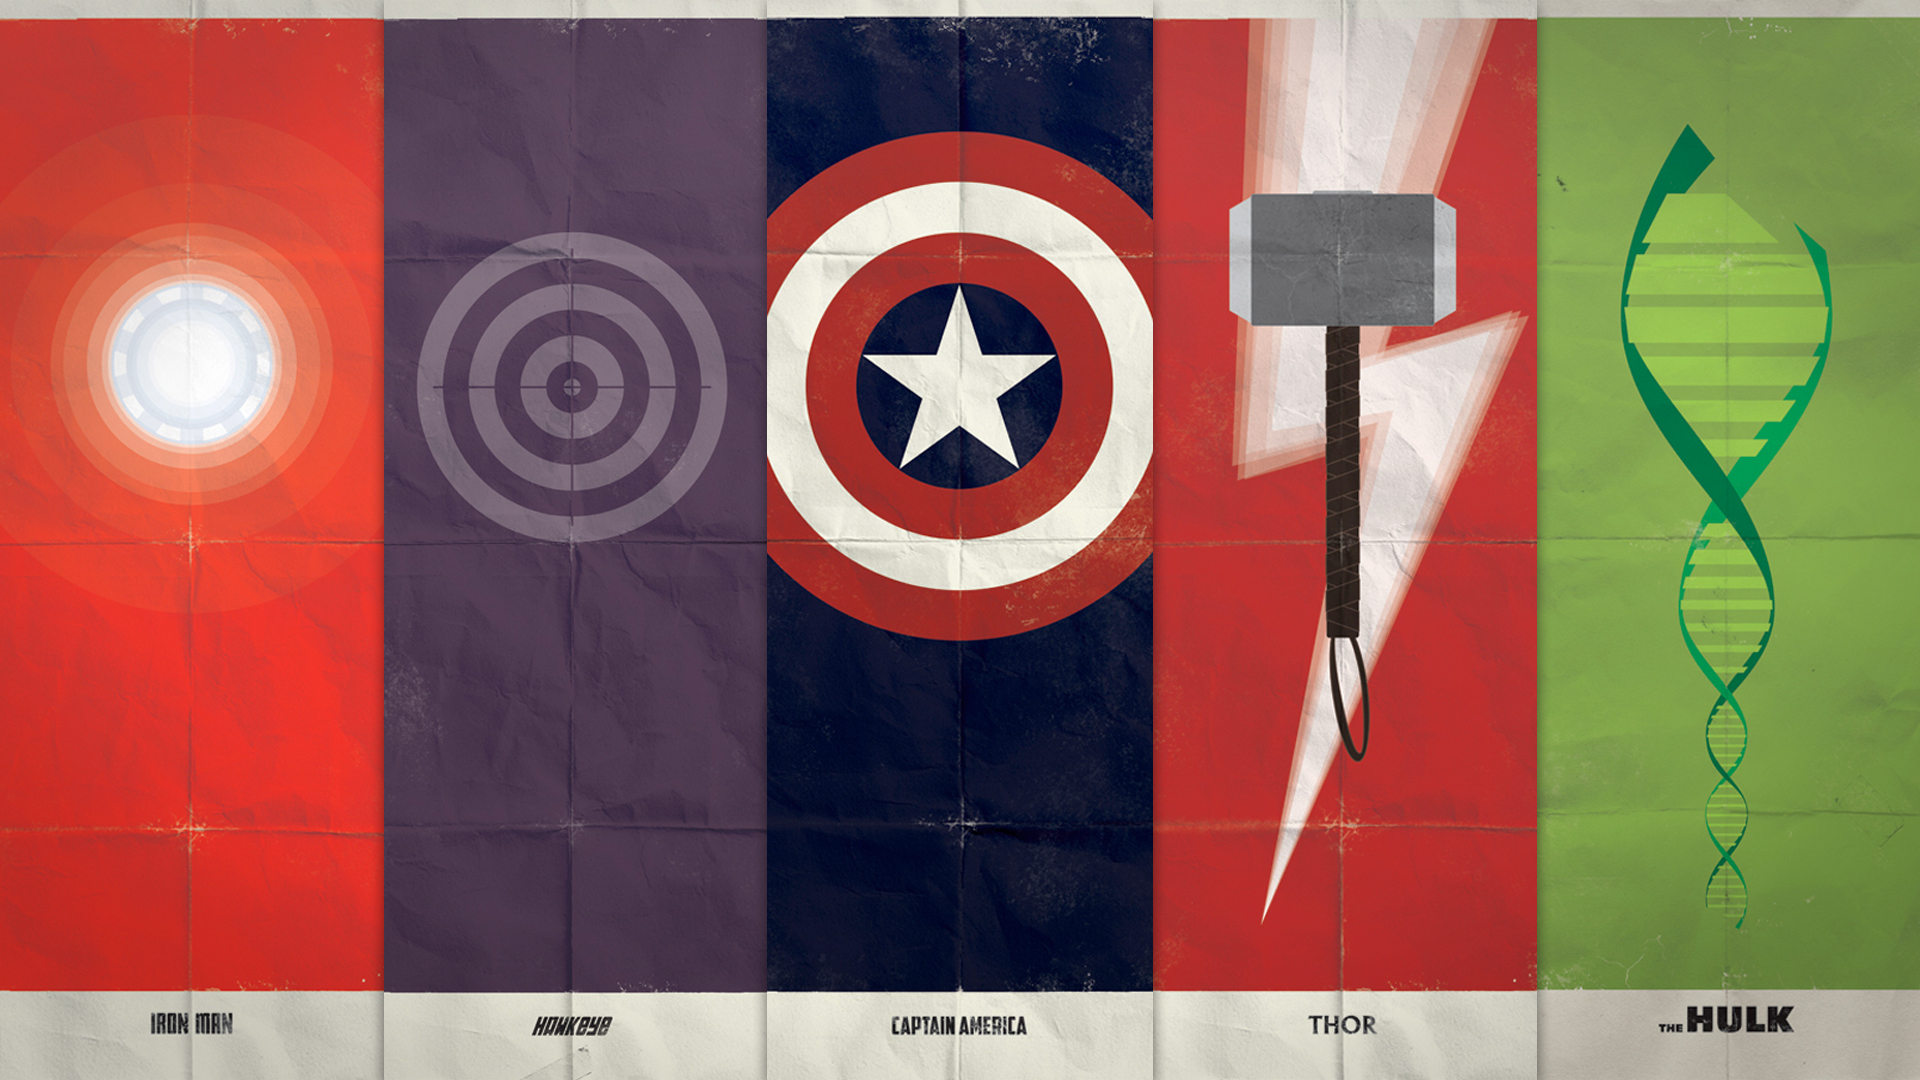 Avengers Puter Wallpaper Desktop Background Id